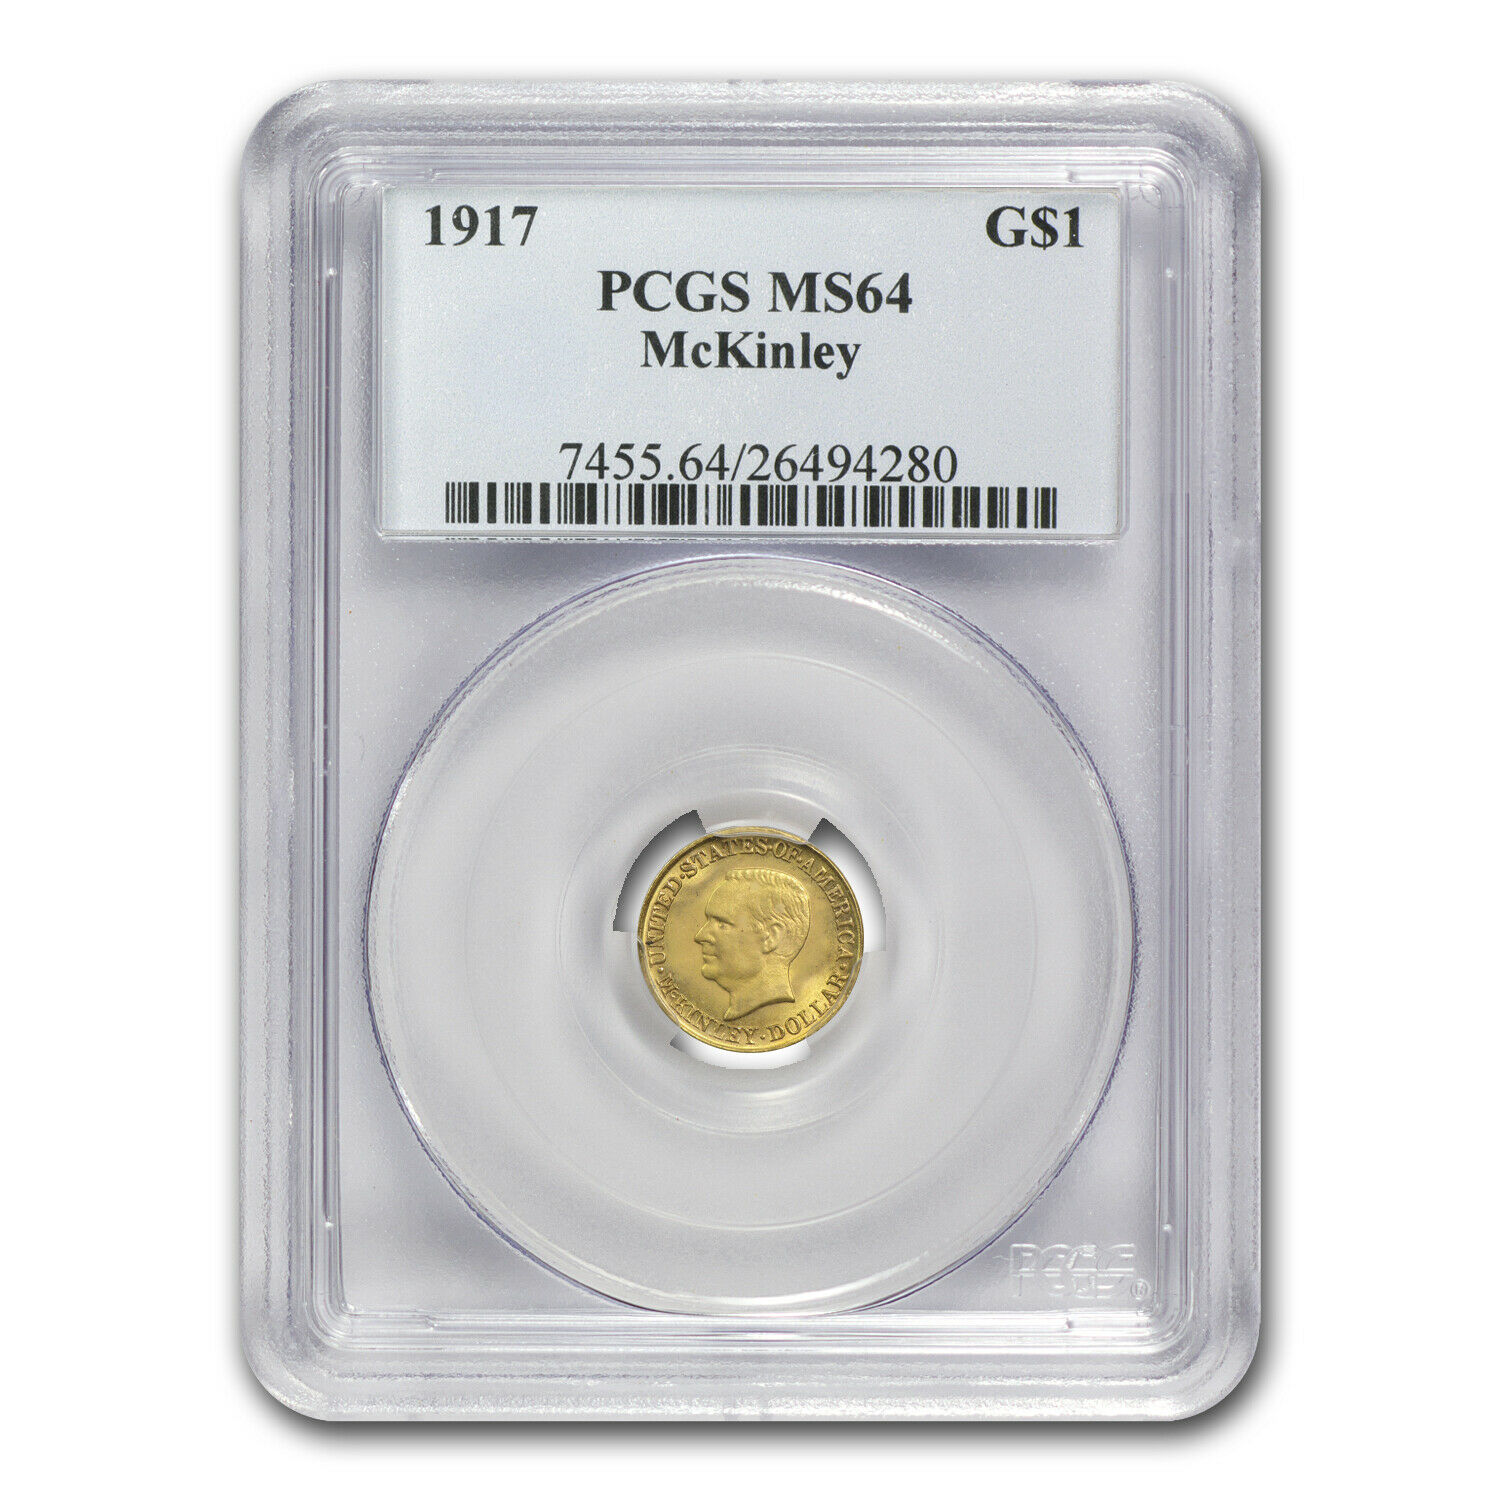 1917 Gold $1.00 Mckinley Memorial Ms-64 Pcgs - Sku #73500